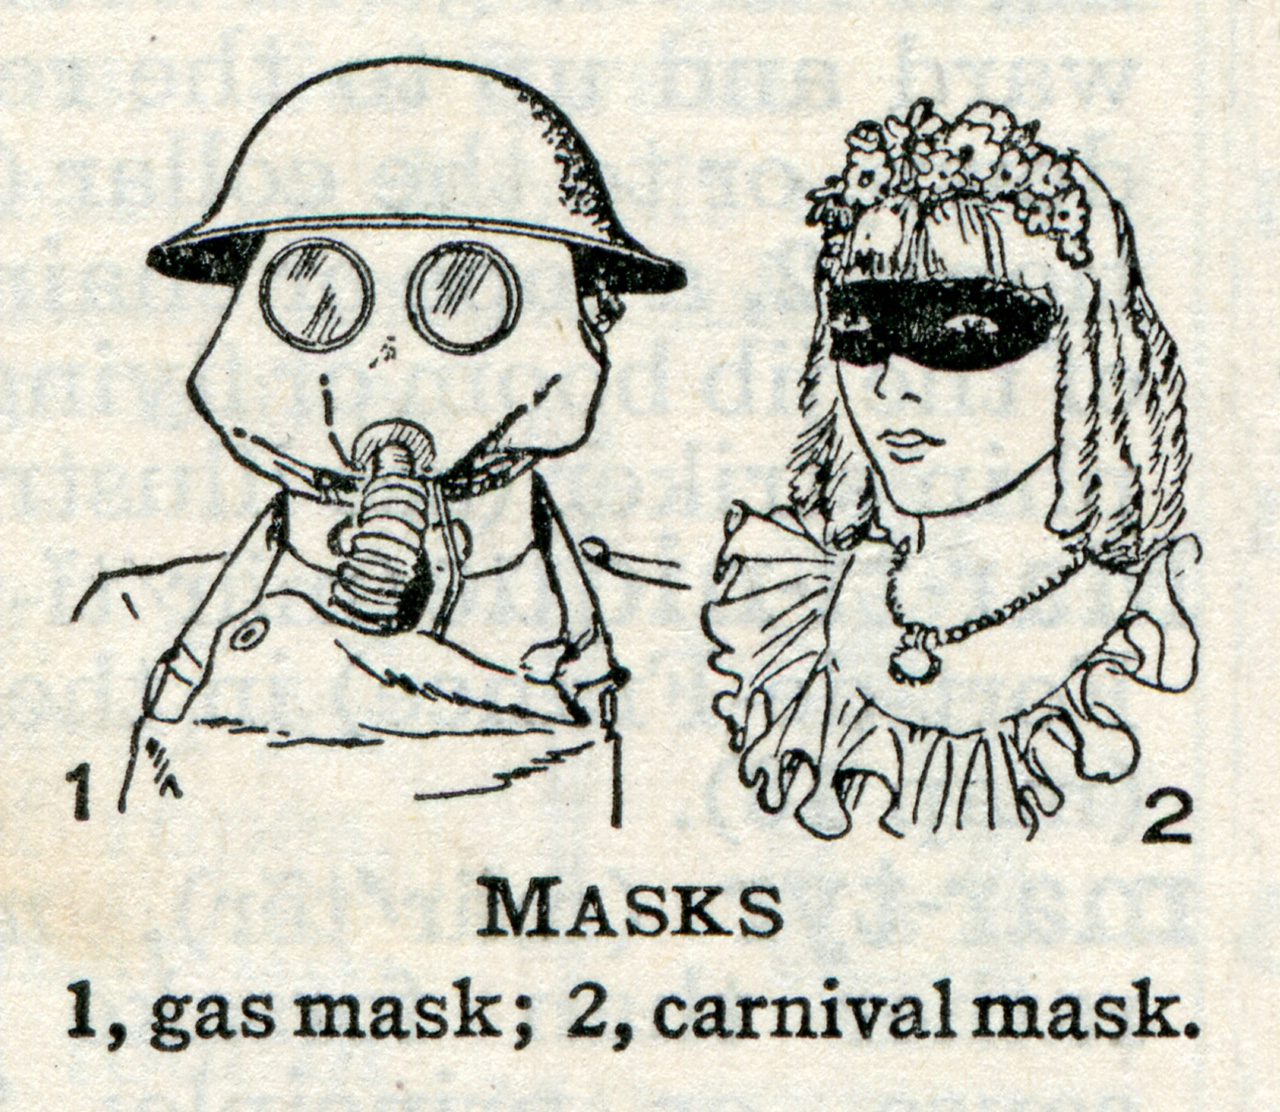 masks_gas_carnival.jpg